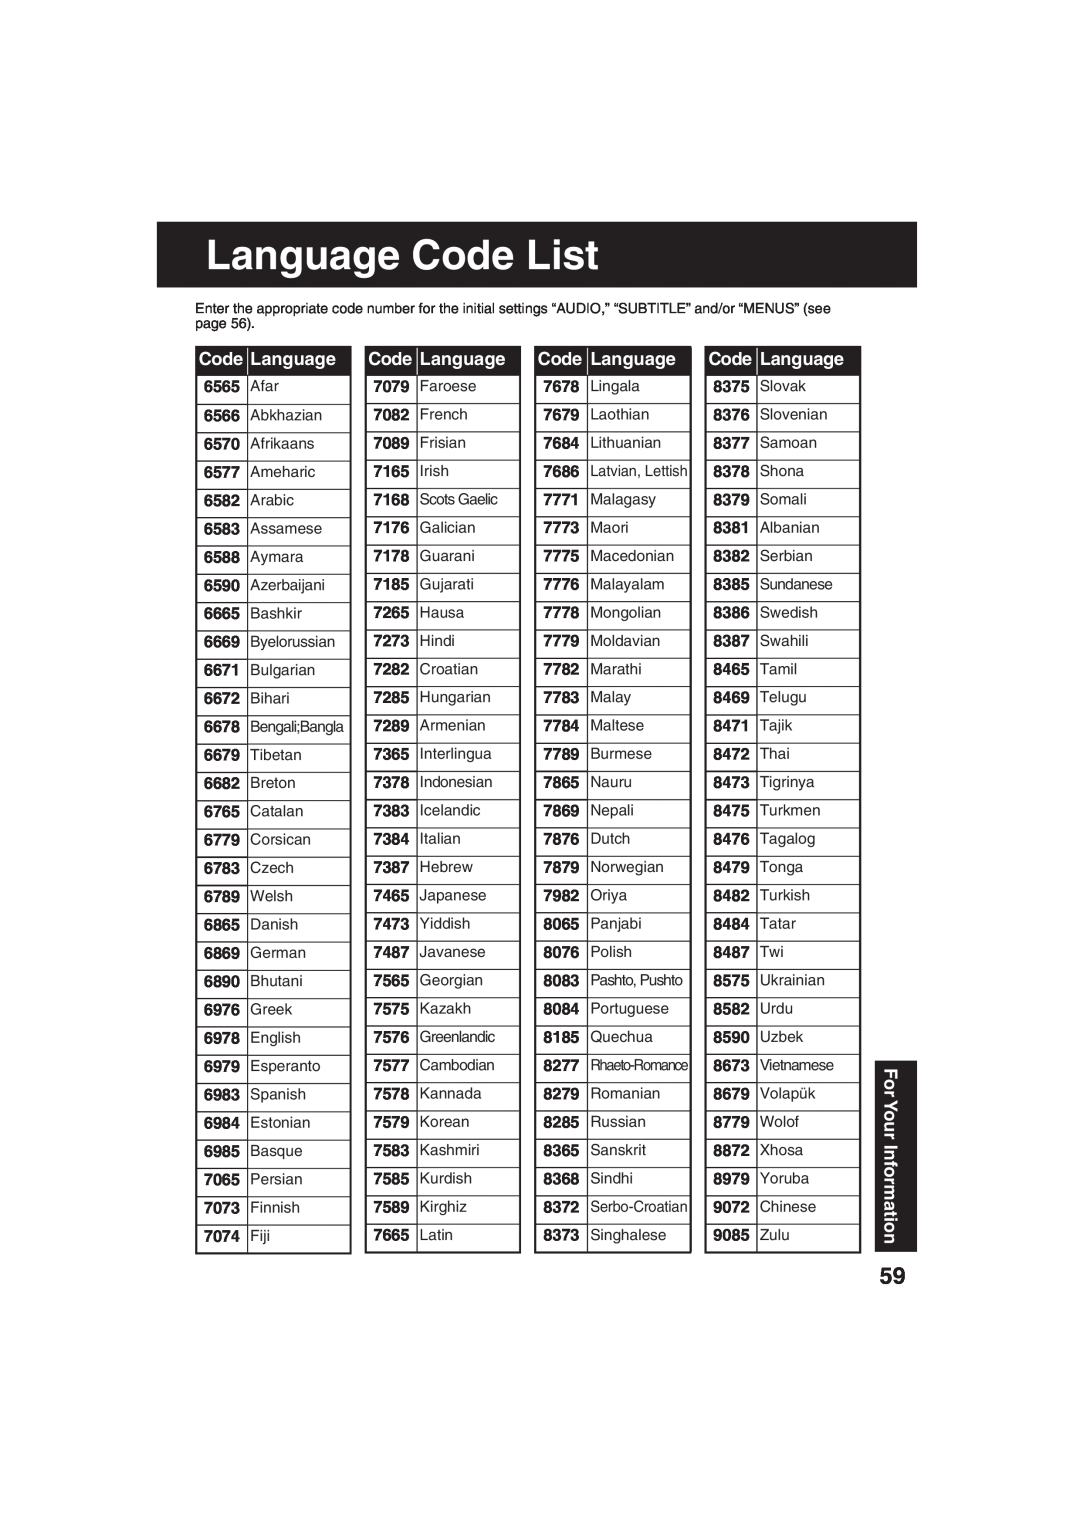 Panasonic PV-DF273 Language Code List, For Your Information, 6565, Afar, 6566, Abkhazian, 6570, Afrikaans, 6577, Ameharic 